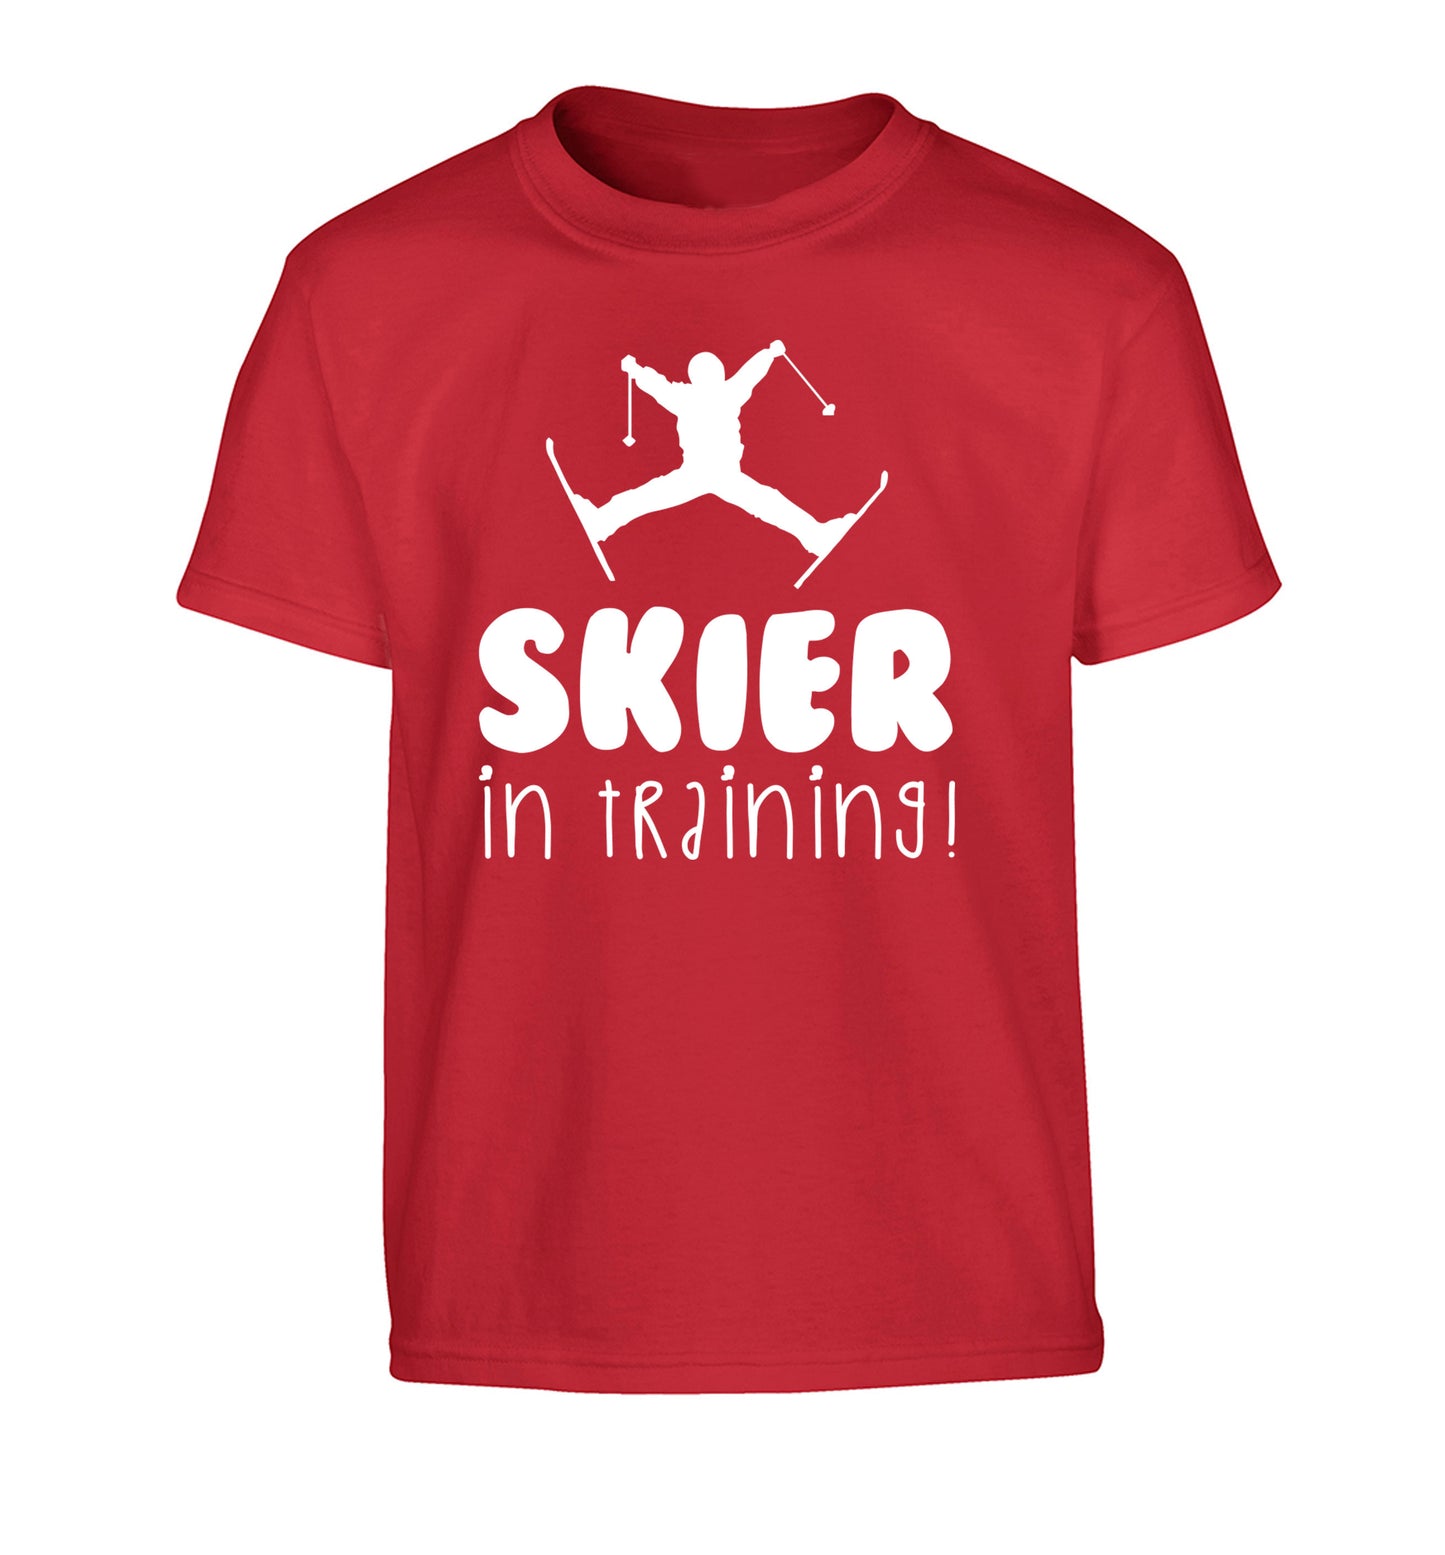 Skier in training Children's red Tshirt 12-14 Years